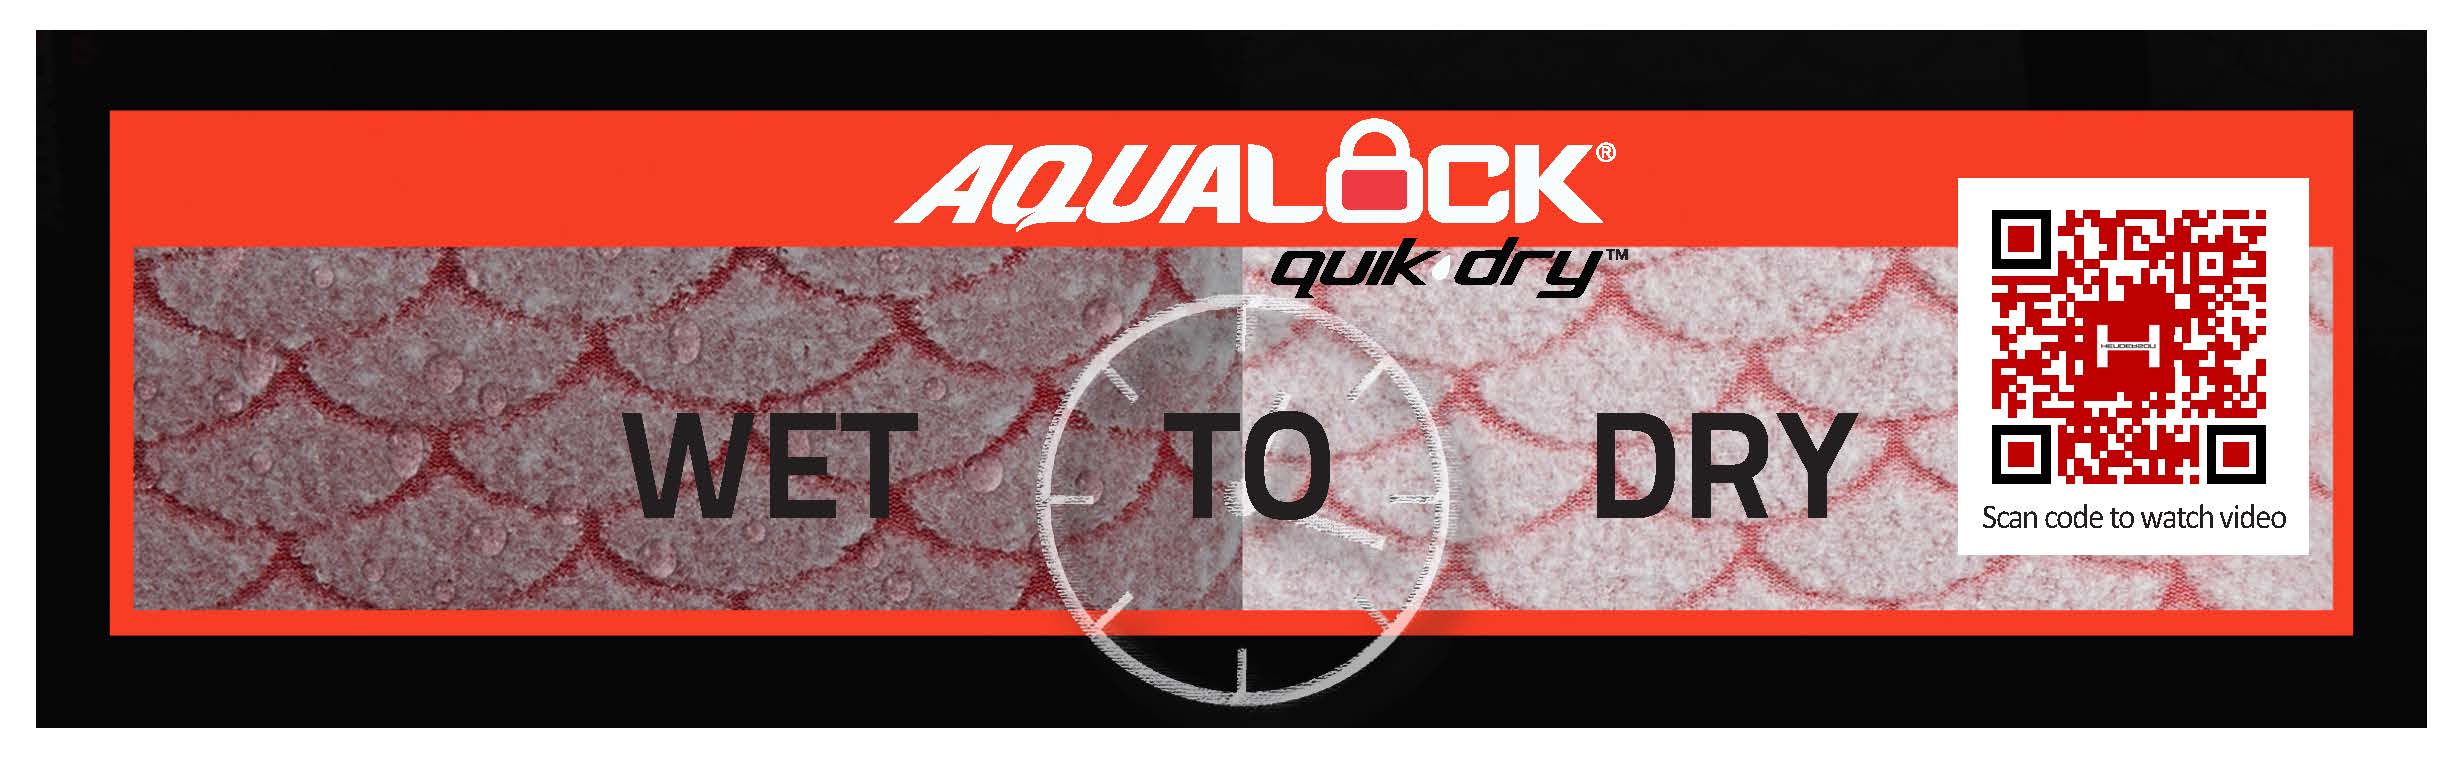 Aqualock banner